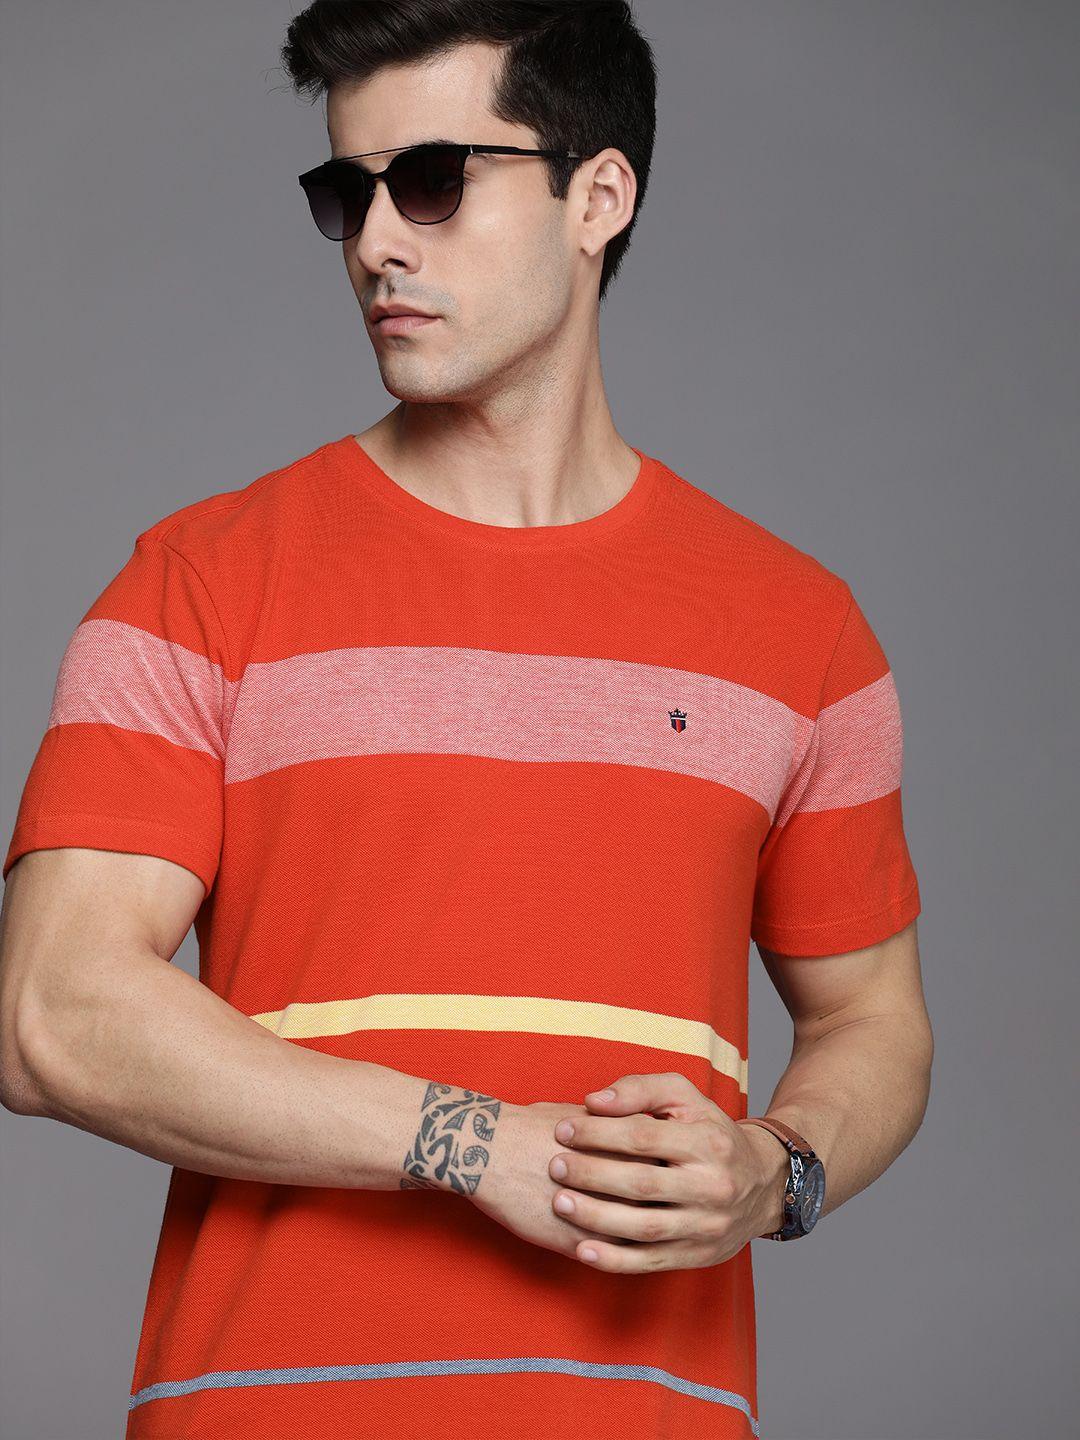 louis-philippe-sport-men-orange-colourblocked-pure-cotton-slim-fit-casual-t-shirt